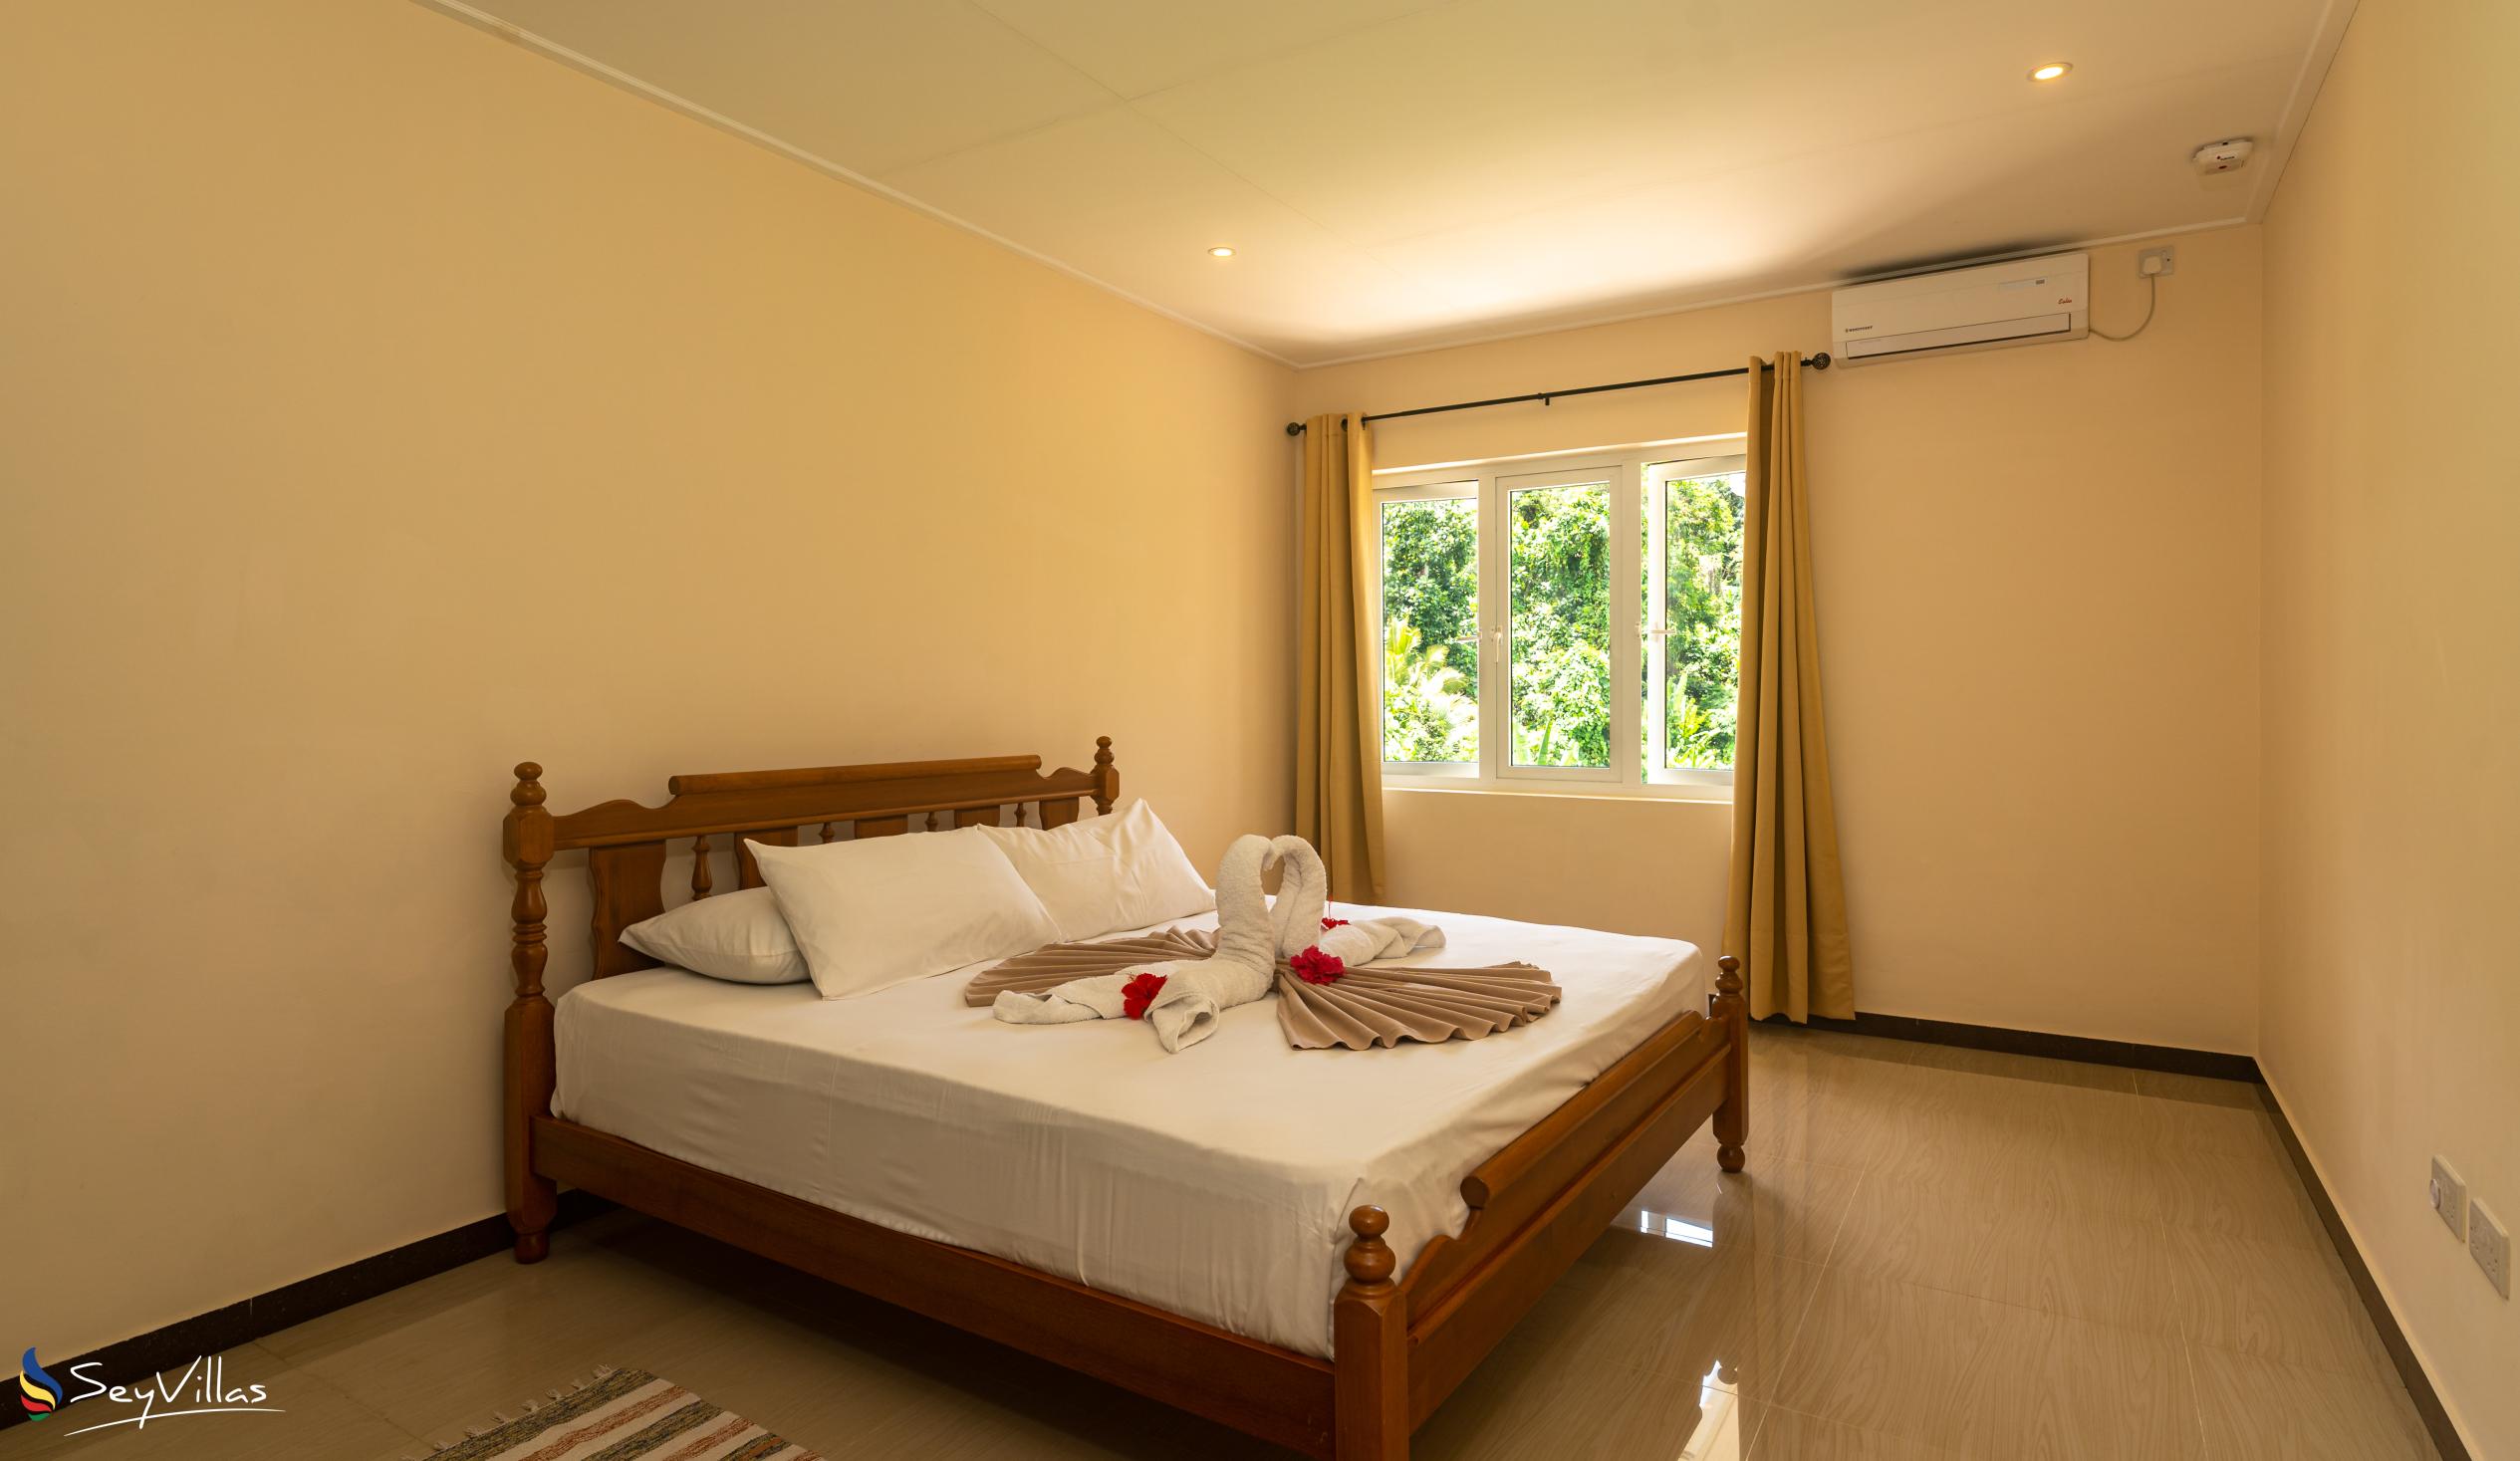 Photo 51: JAIDSS Holiday Apartments - 2-Bedroom Apartment - Mahé (Seychelles)